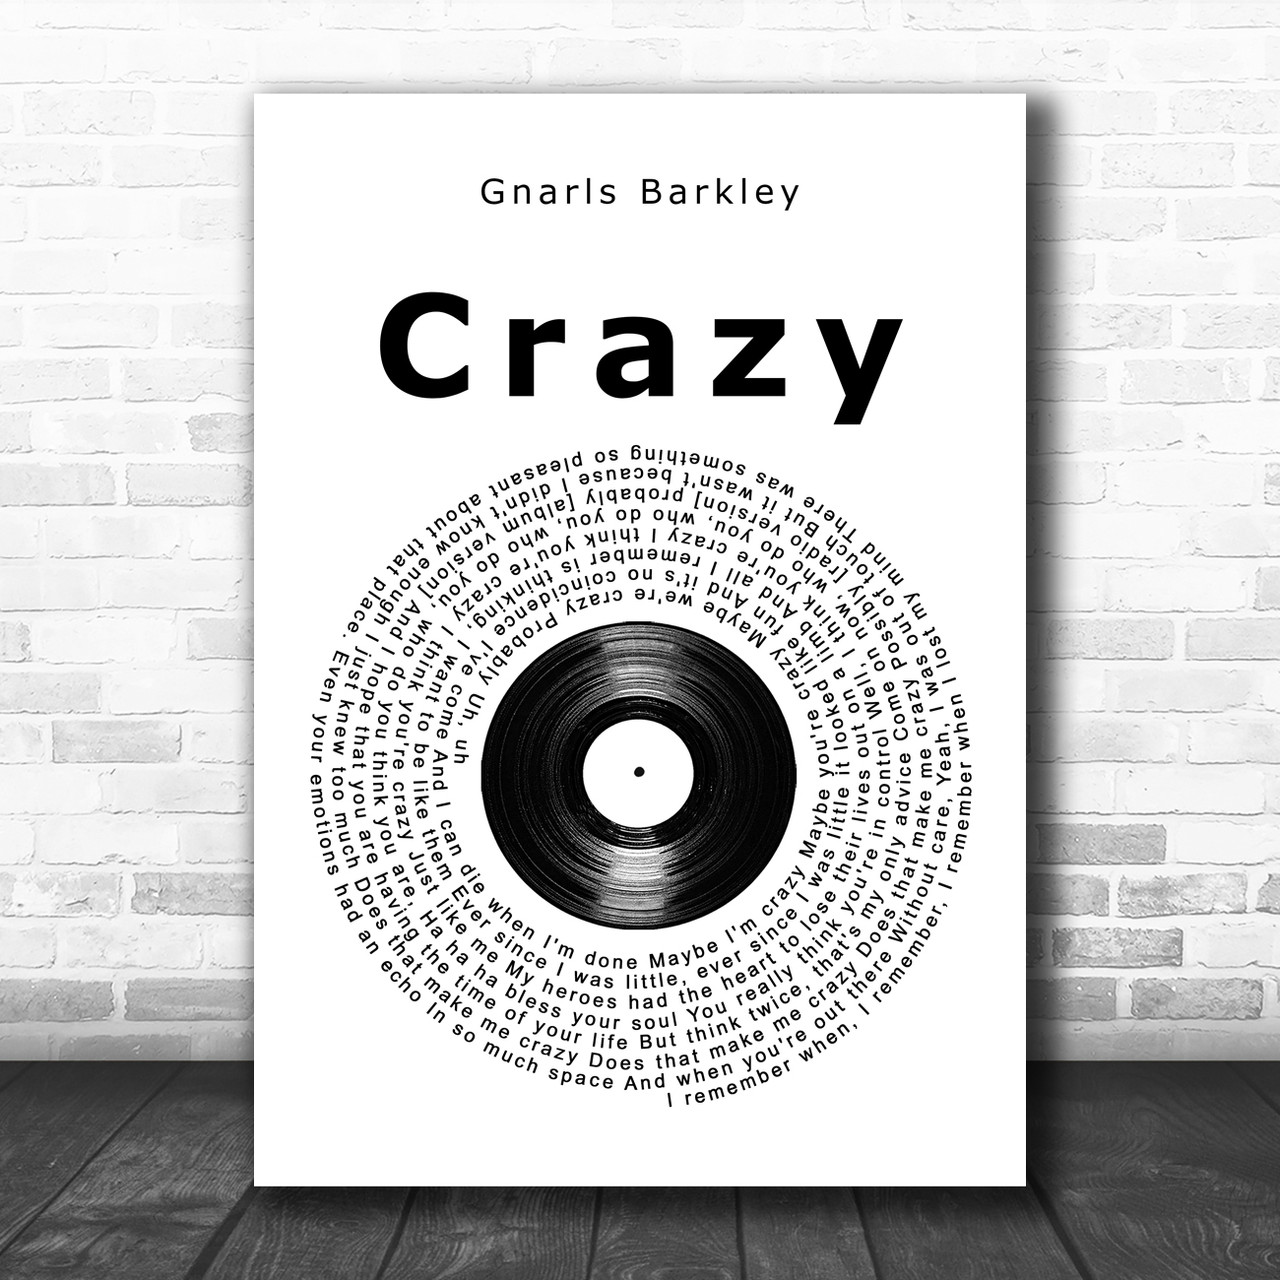 Behind The Song Lyrics: “Crazy” by Gnarls Barkley - American